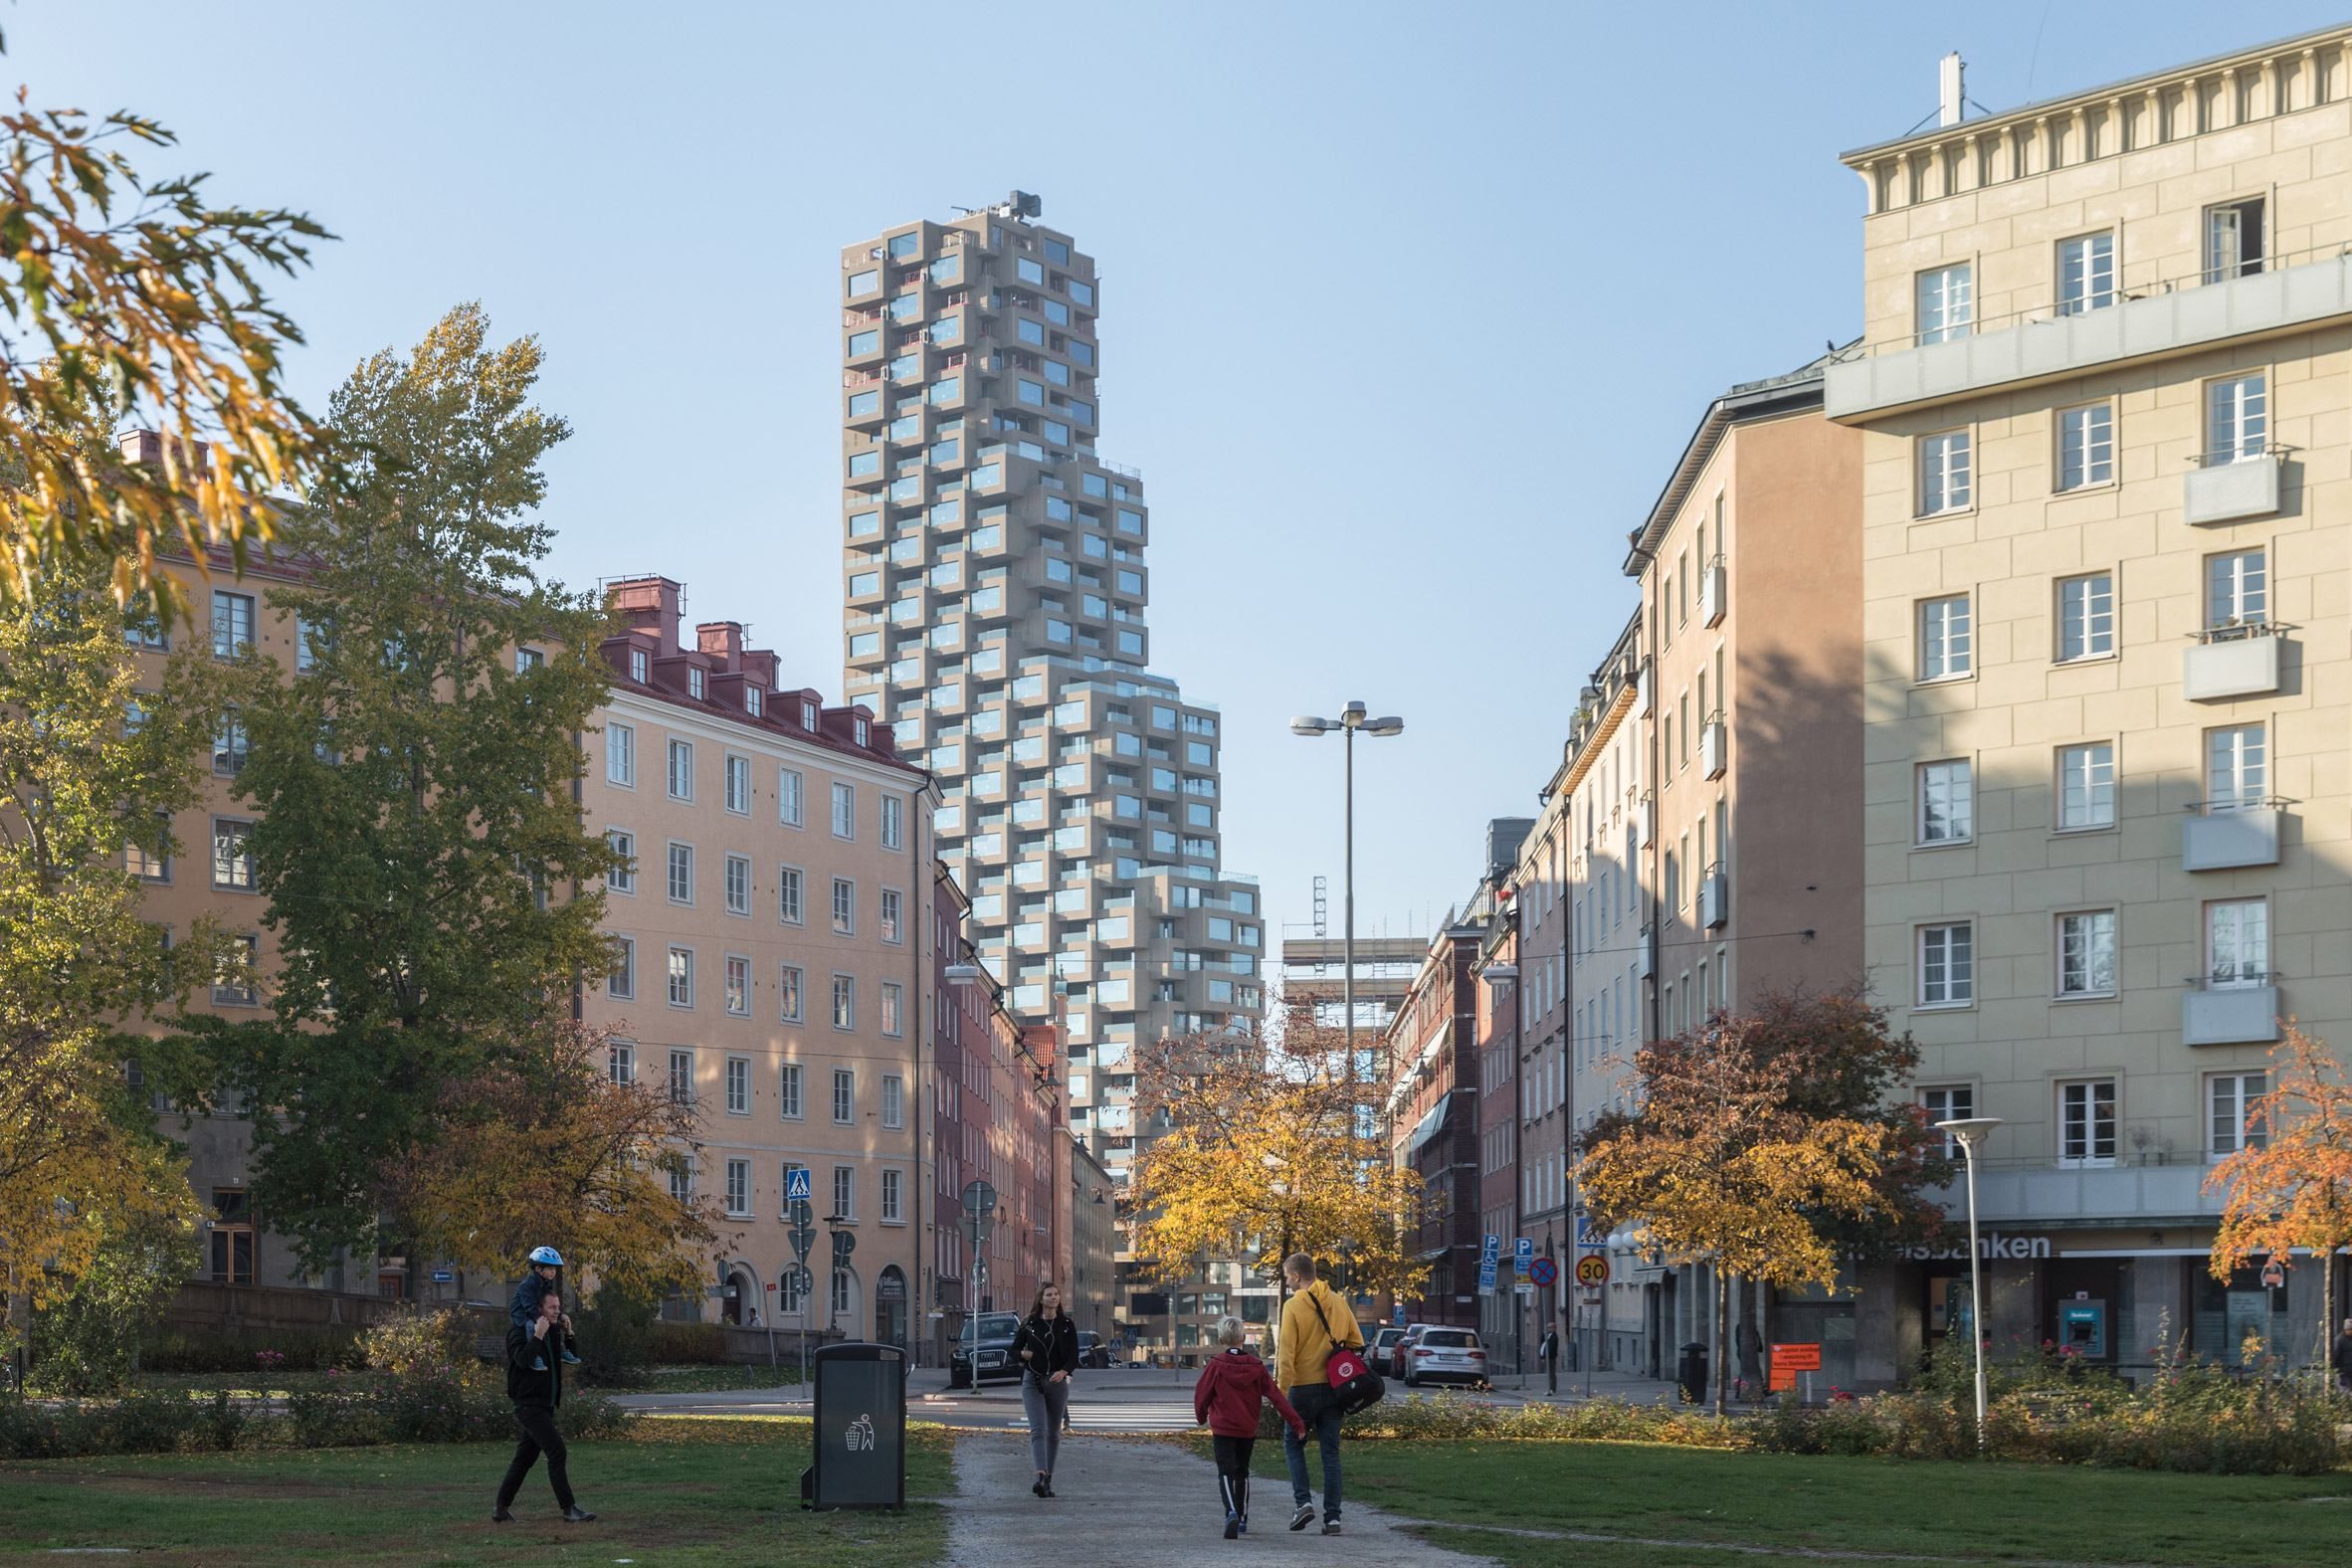 Innovationen Tower: як виглядає і чим вражає найвищий житловий хмарочос Стокгольма